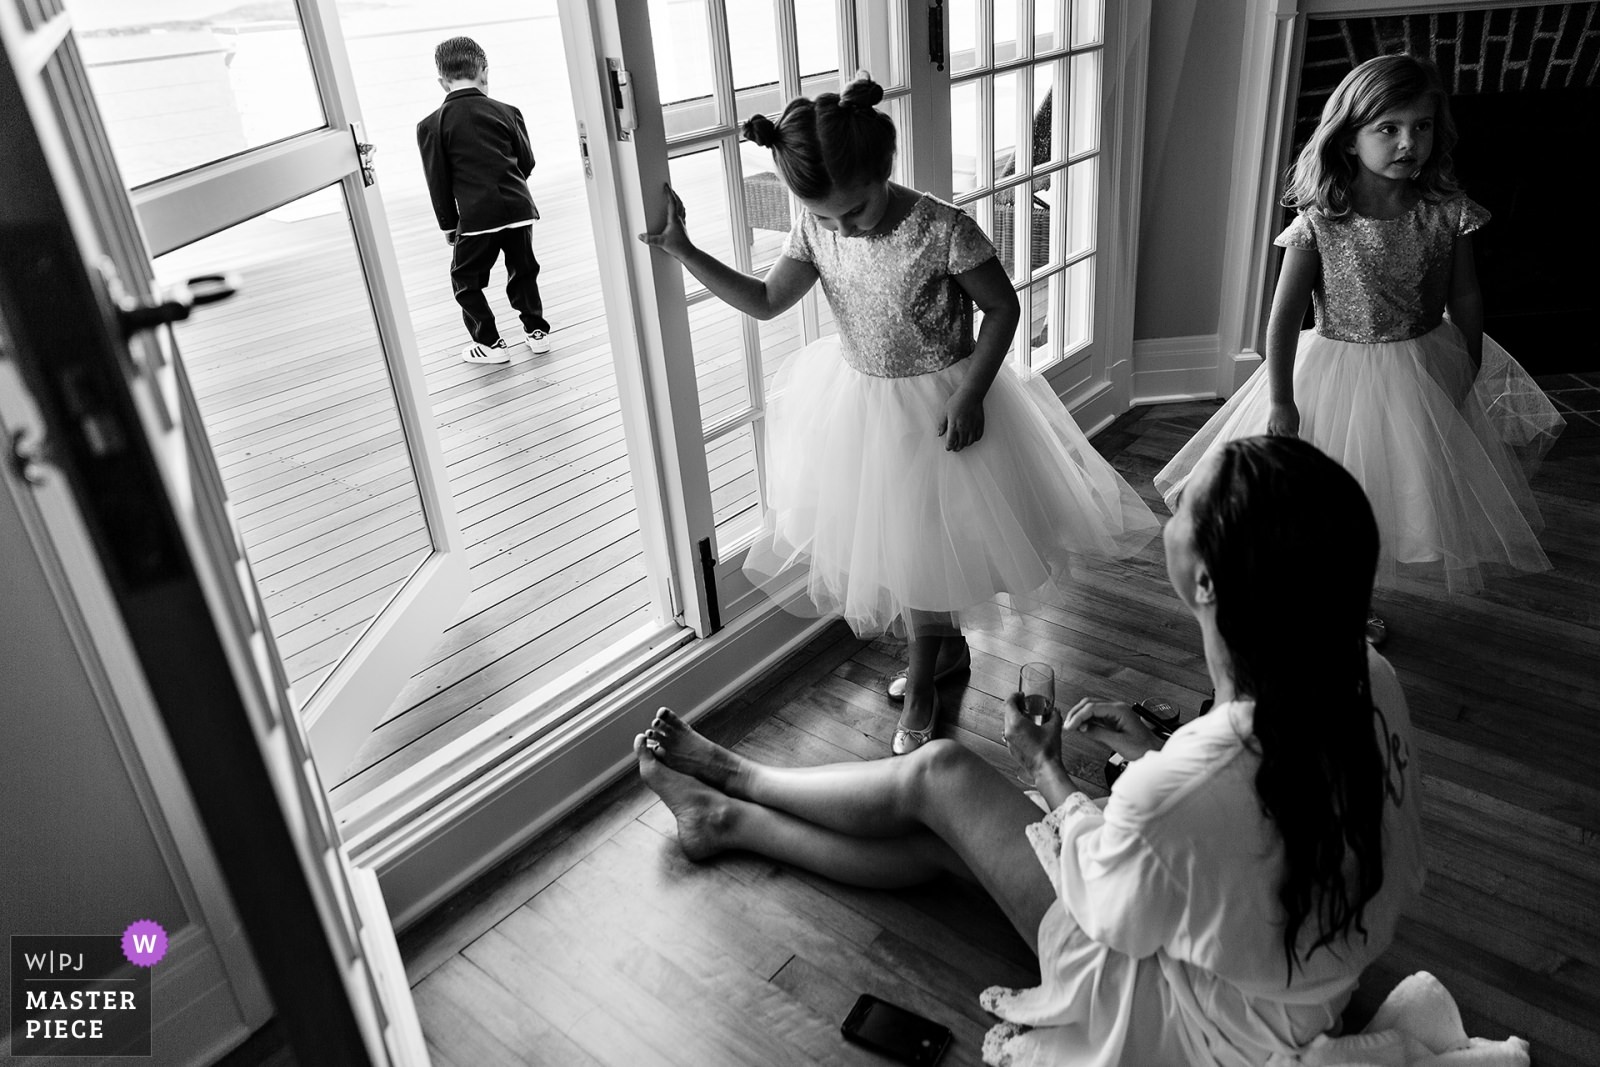 Creative Maine documentary wedding photographers in Maine